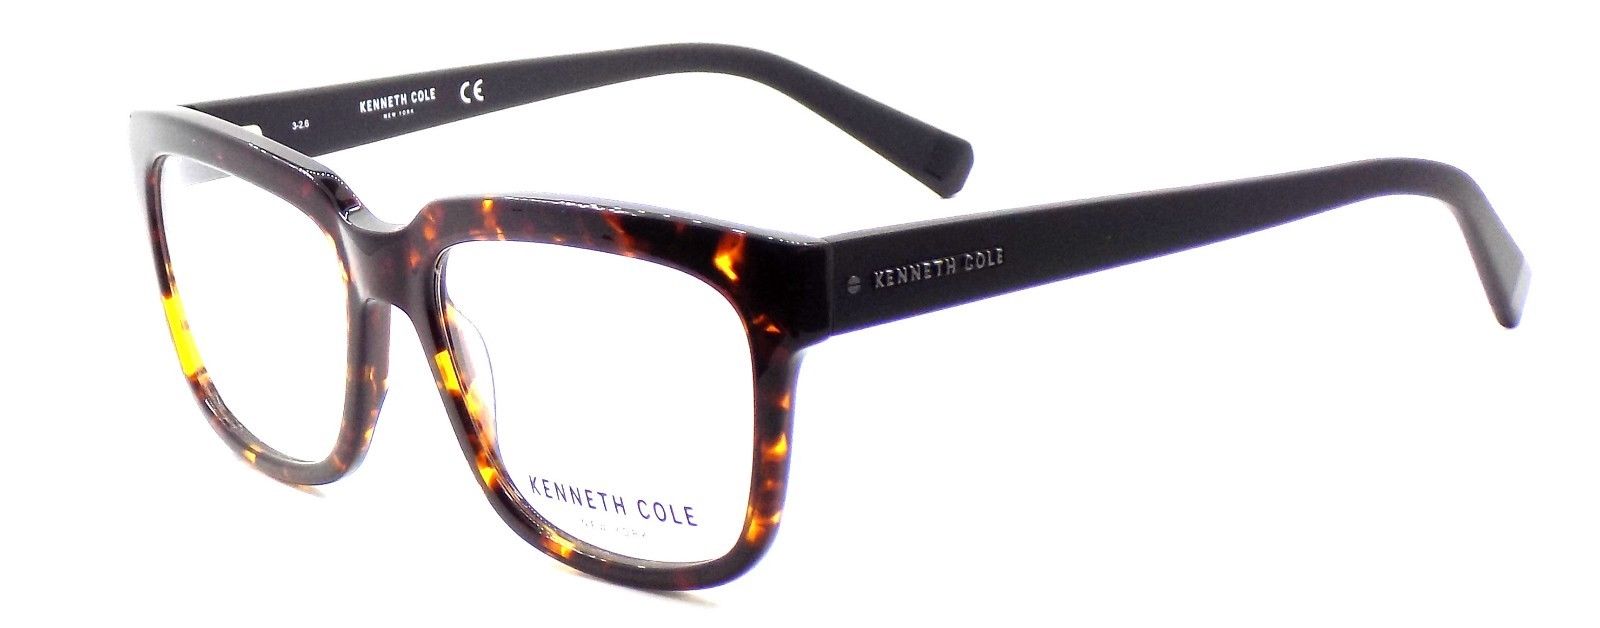 2-Kenneth Cole NY KC0256 52A Men's Eyeglasses w/ Clip-ons Dark Havana / Smoke-664689890774-IKSpecs